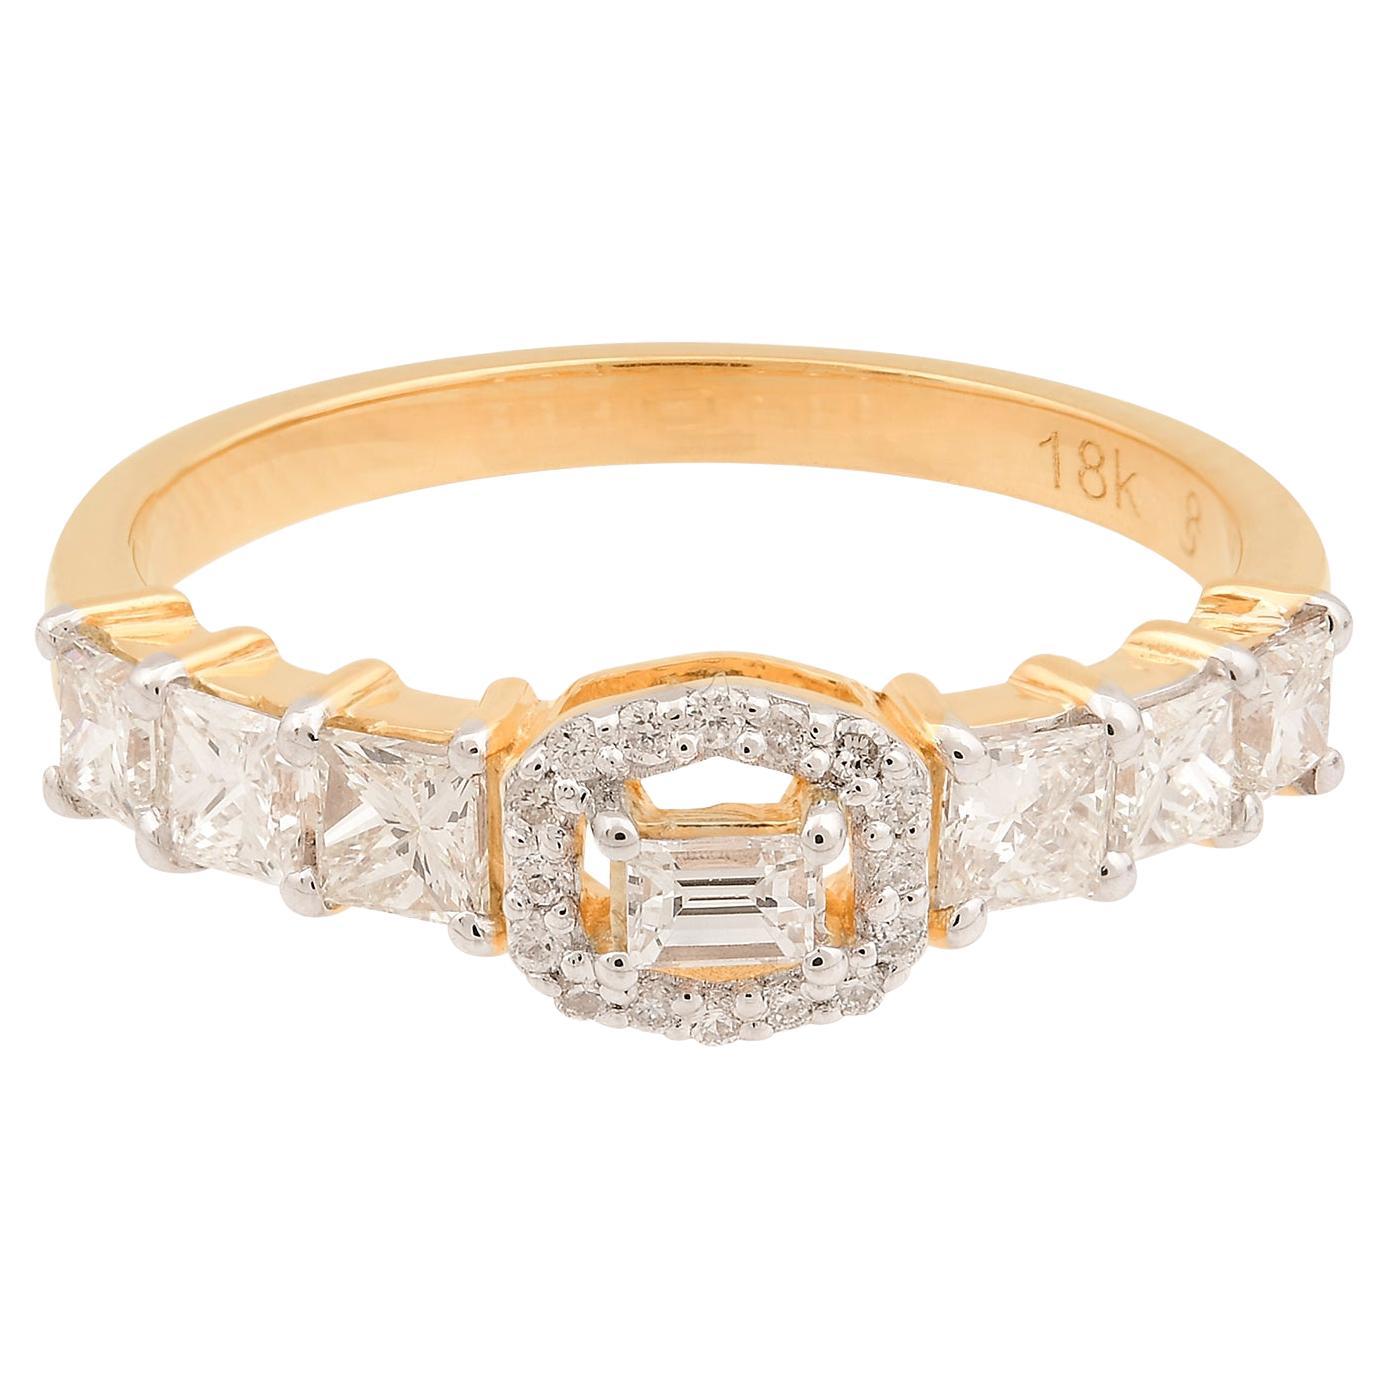 0.8 Carat Round Baguette Princess Cut Diamond Ring 14 Karat Yellow Gold Jewelry For Sale